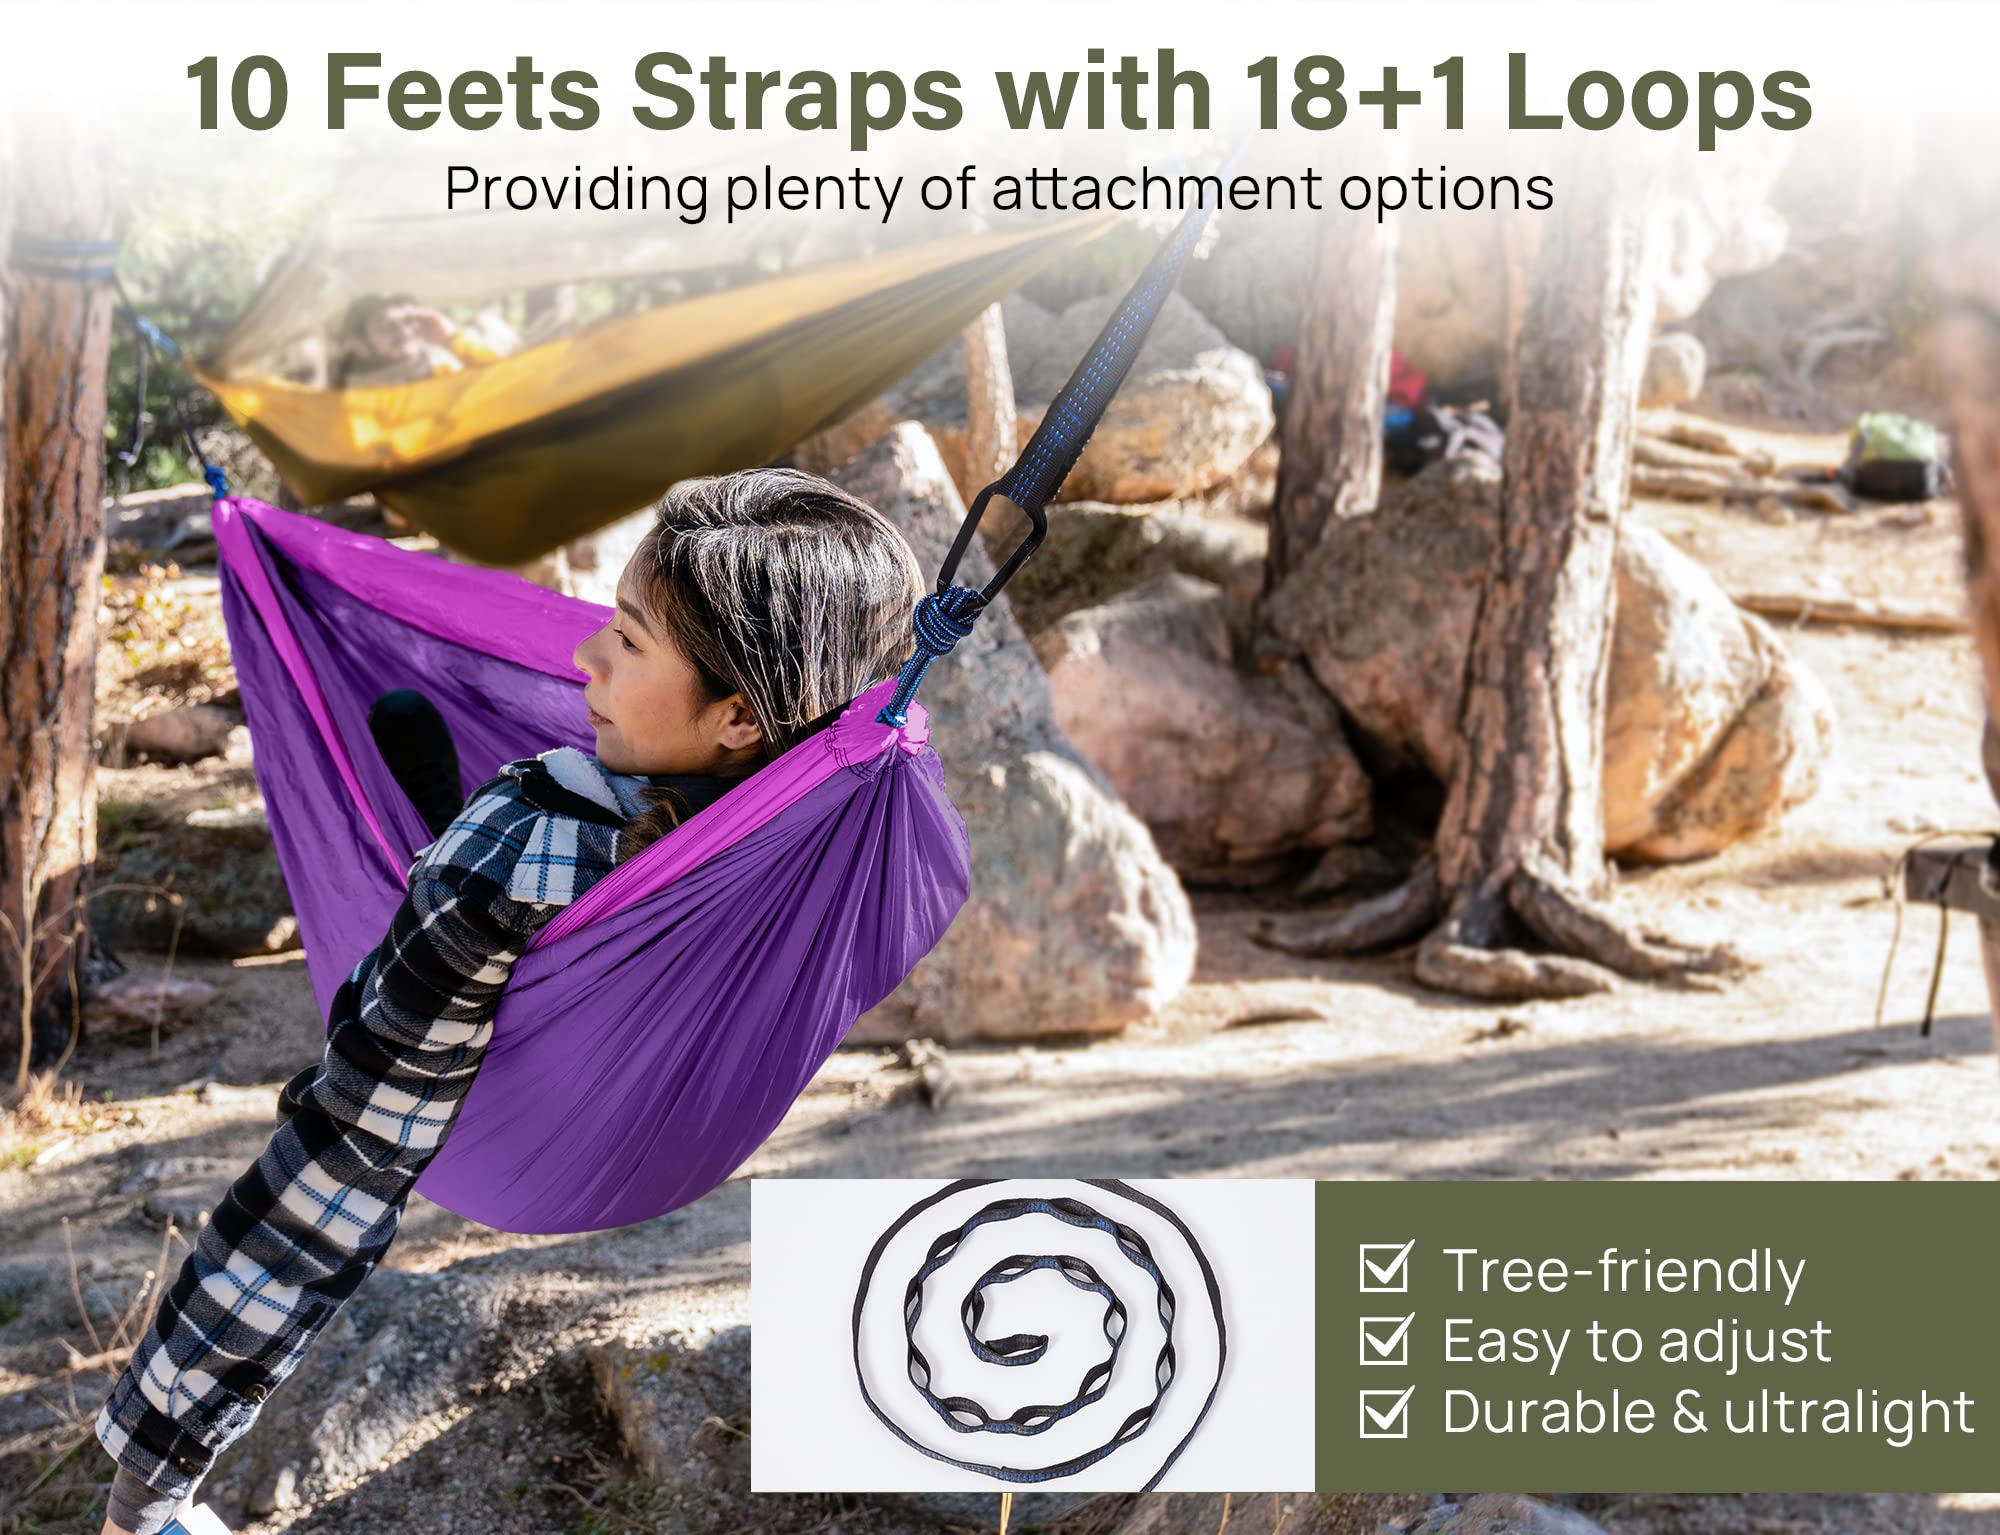 Kootek Camping Hammock Double Portable Hammocks with 2 Tree Straps, Lightweight Nylon Parachute Hammocks for Backpacking, Travel, Beach, Backyard, Patio, Hiking (Violet & Fuchsia, Large)